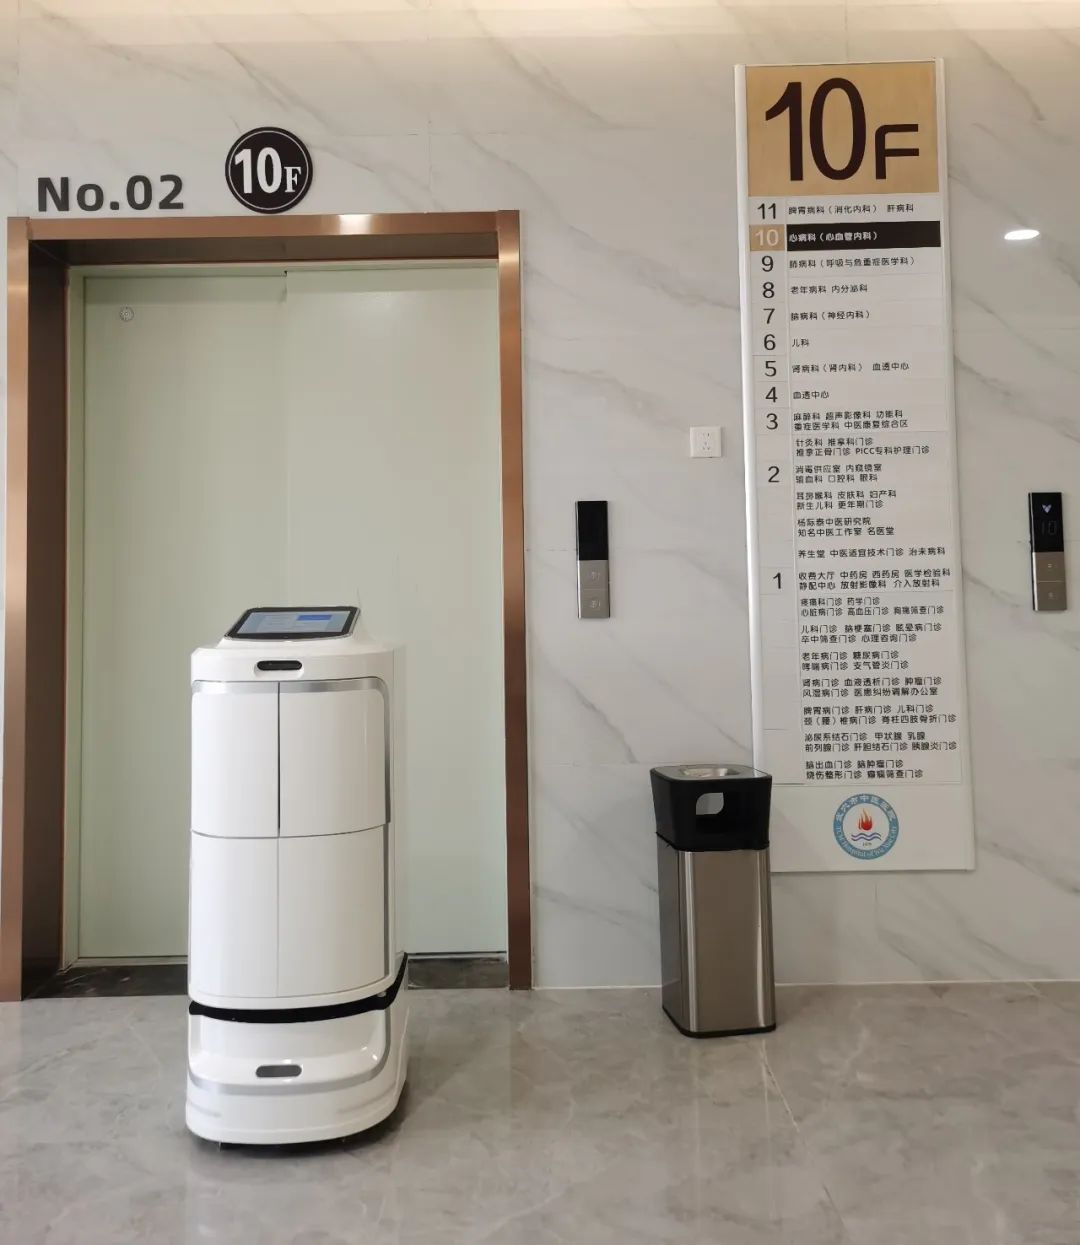 Innovative Technologie zur Unterstützung der medizinischen Behandlung: Alpha Robotics drei Roboterserien im Anwendungsfall „Wuxue City Hospital of Traditional Chinese Medicine“!